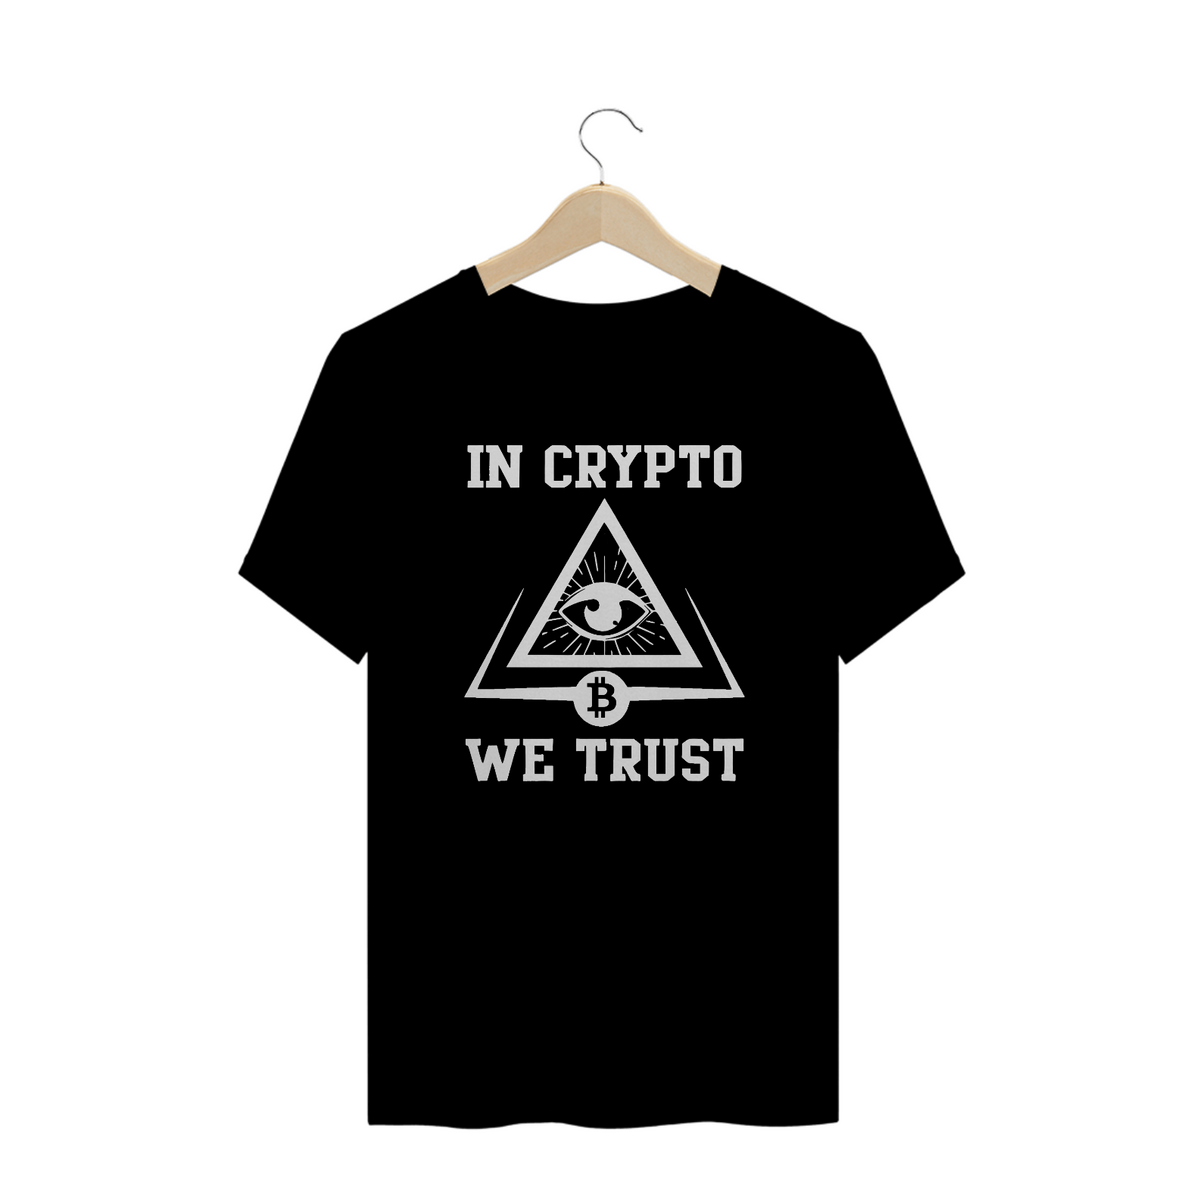 Nome do produto: Criptos - Camisa InCrypto We Trust